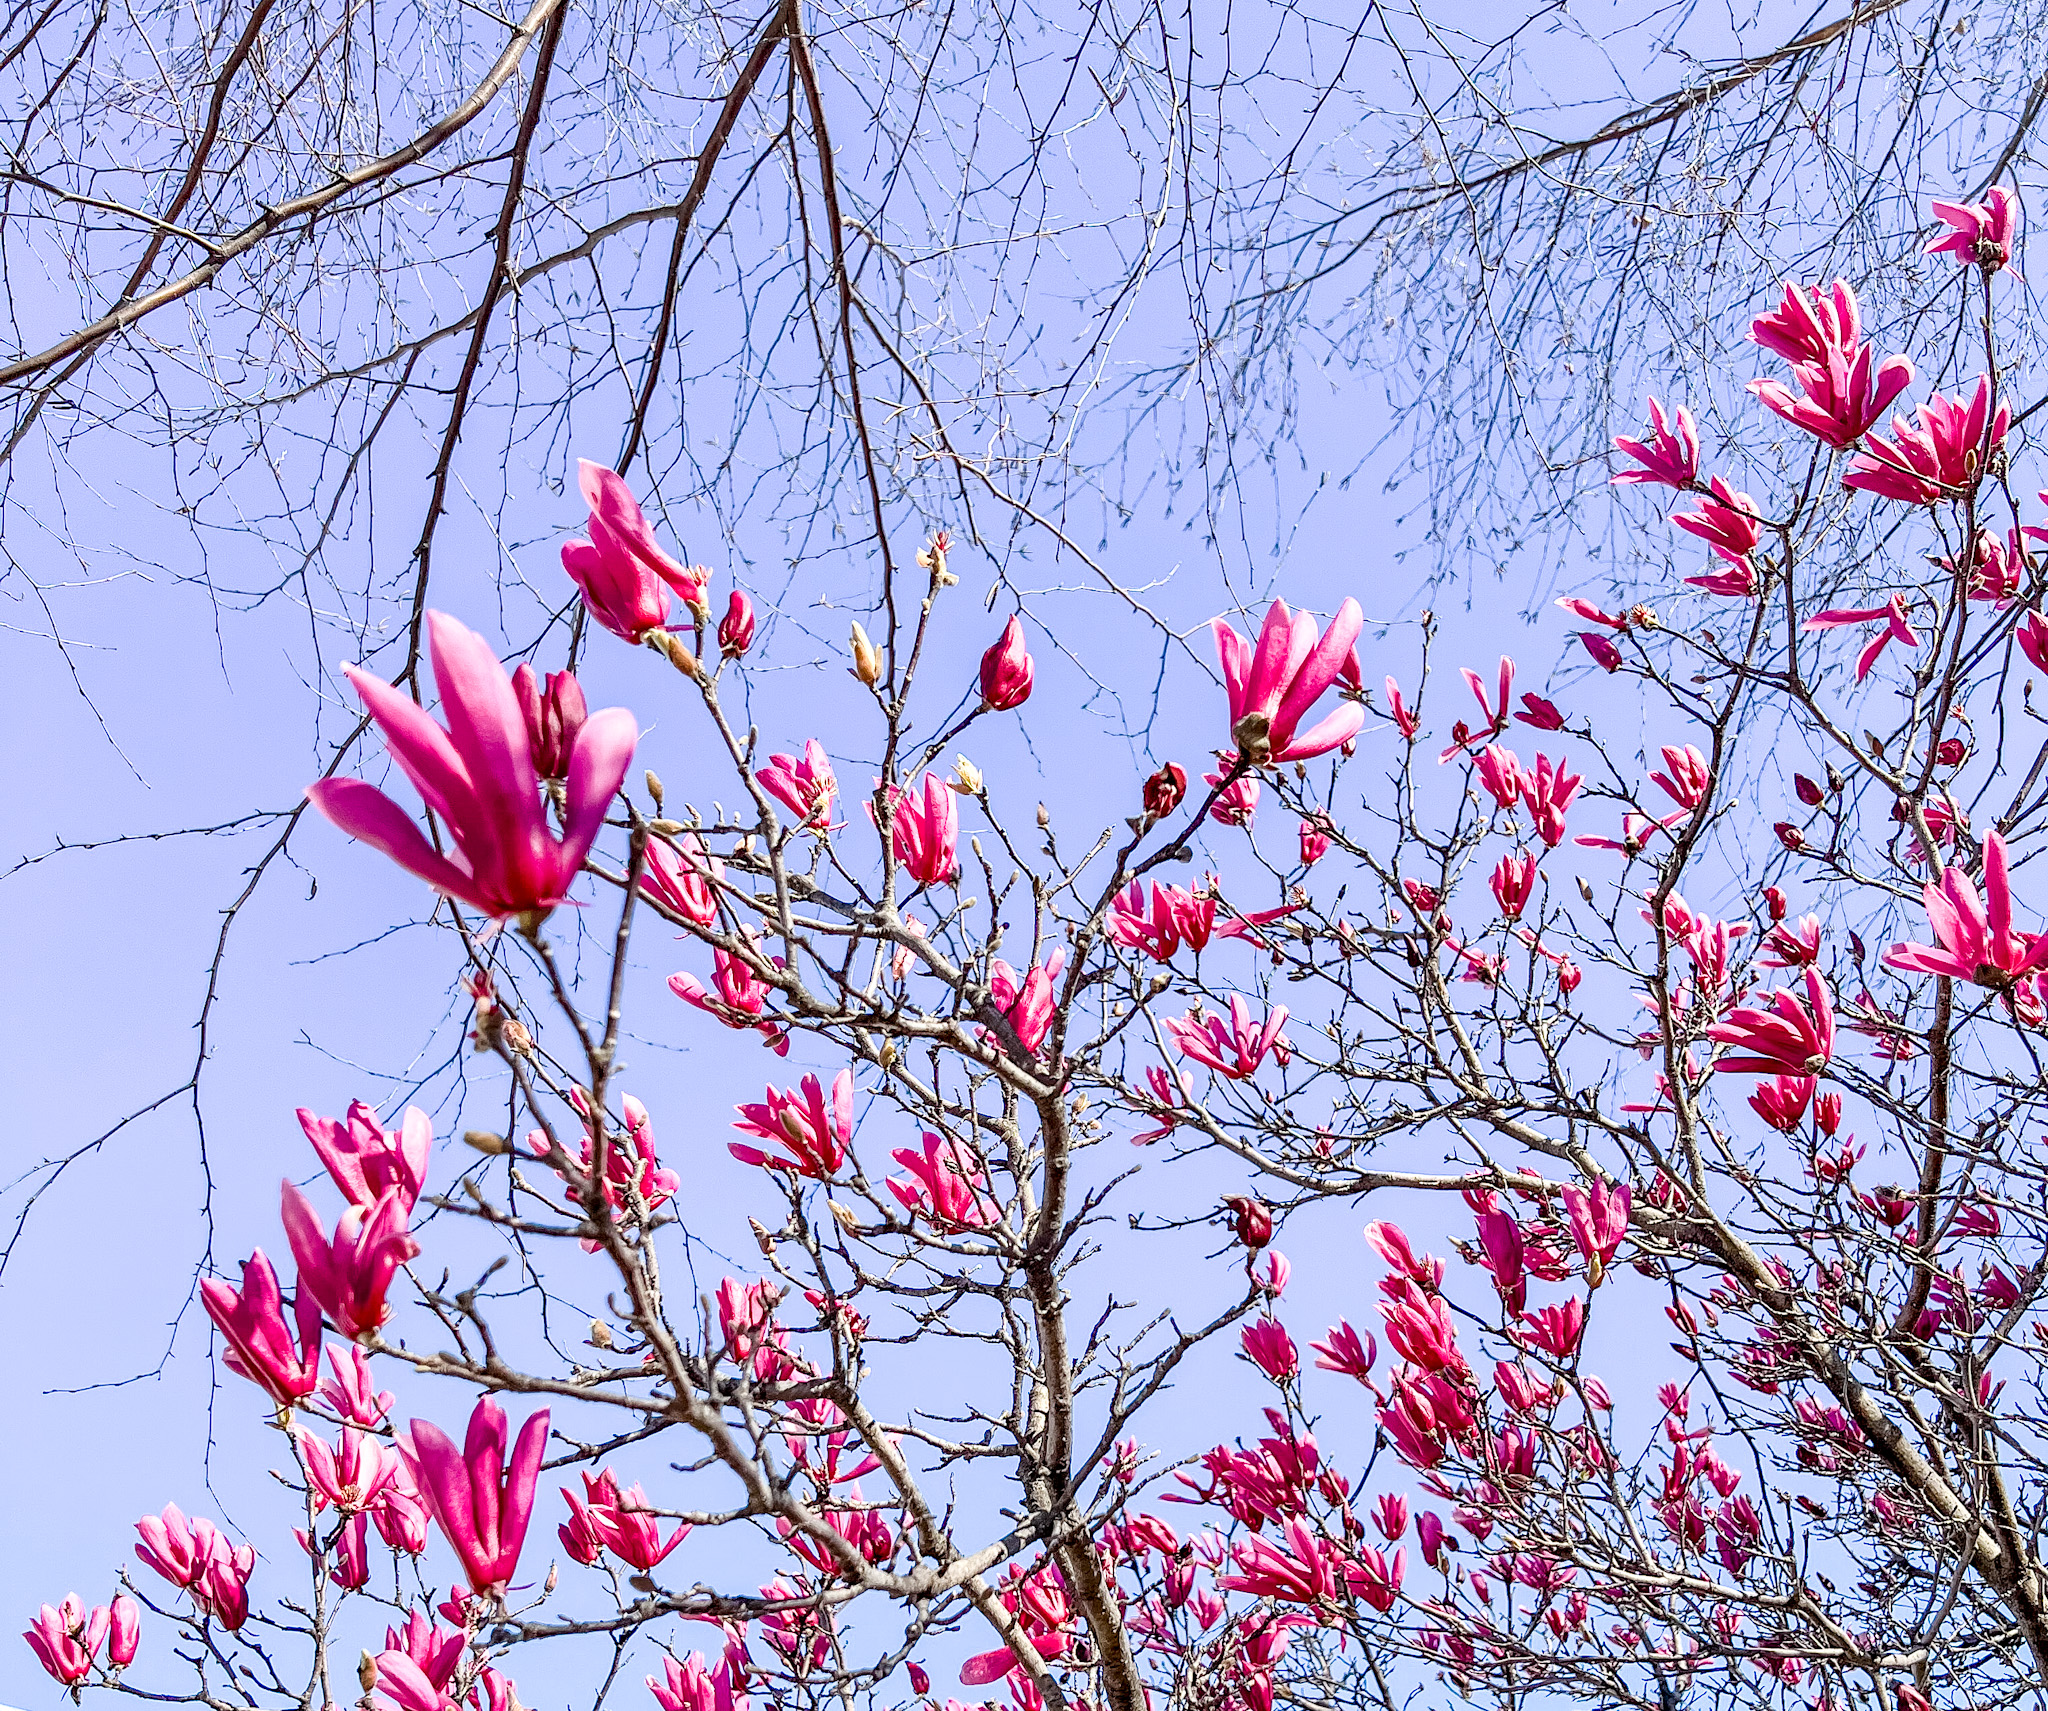 A flowering pink magnolia tree